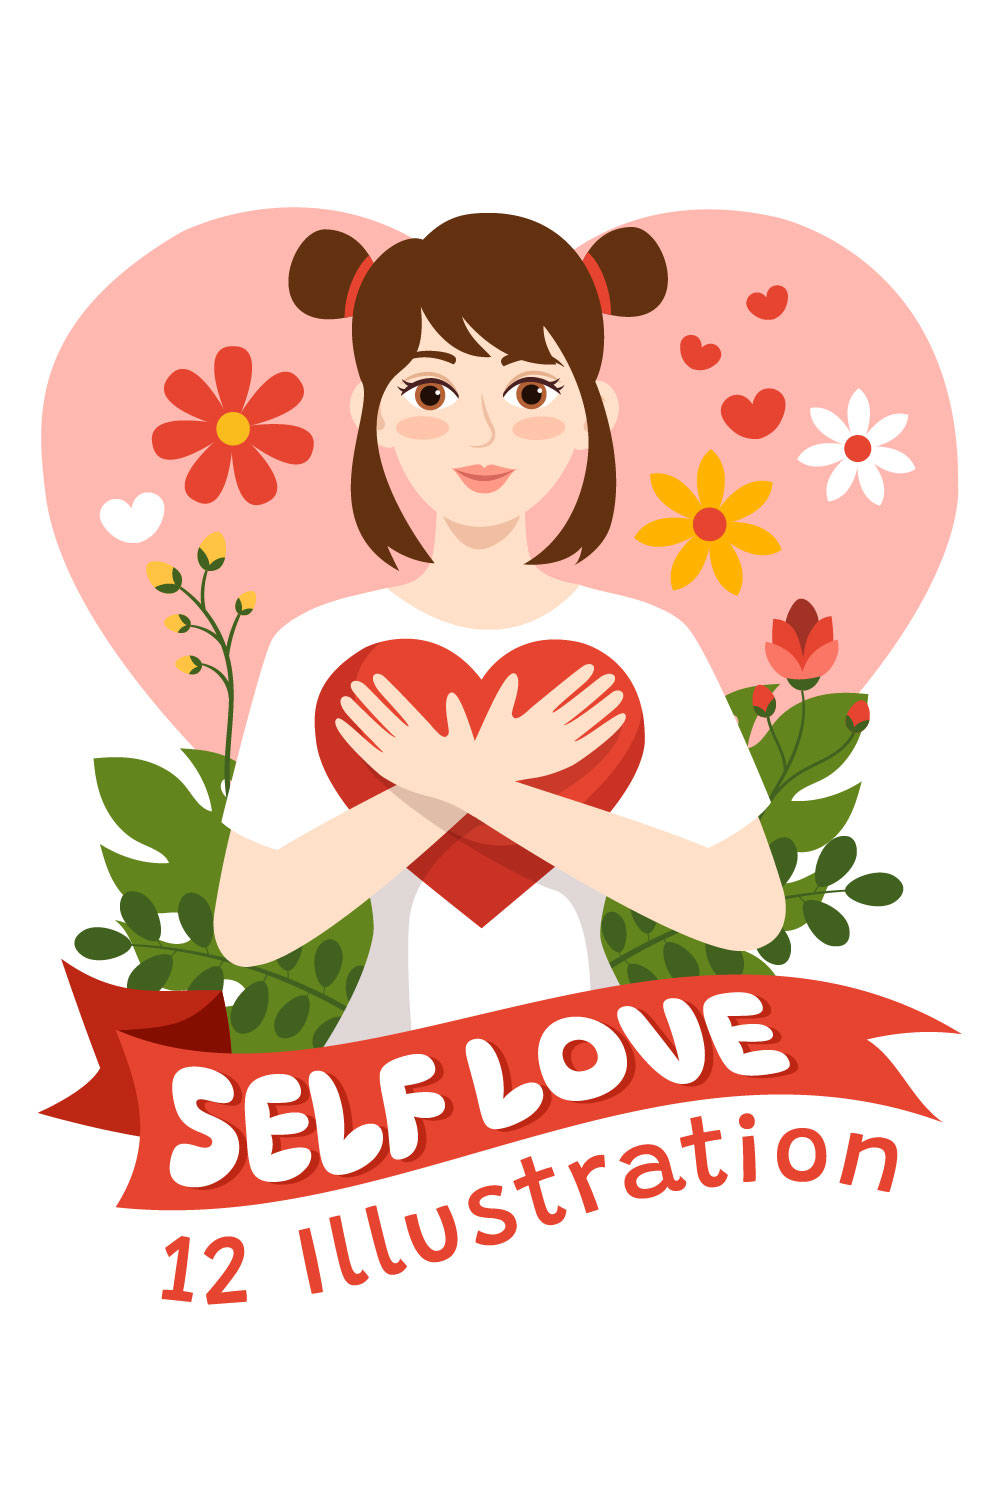 12 Women Self Love Illustration pinterest preview image.